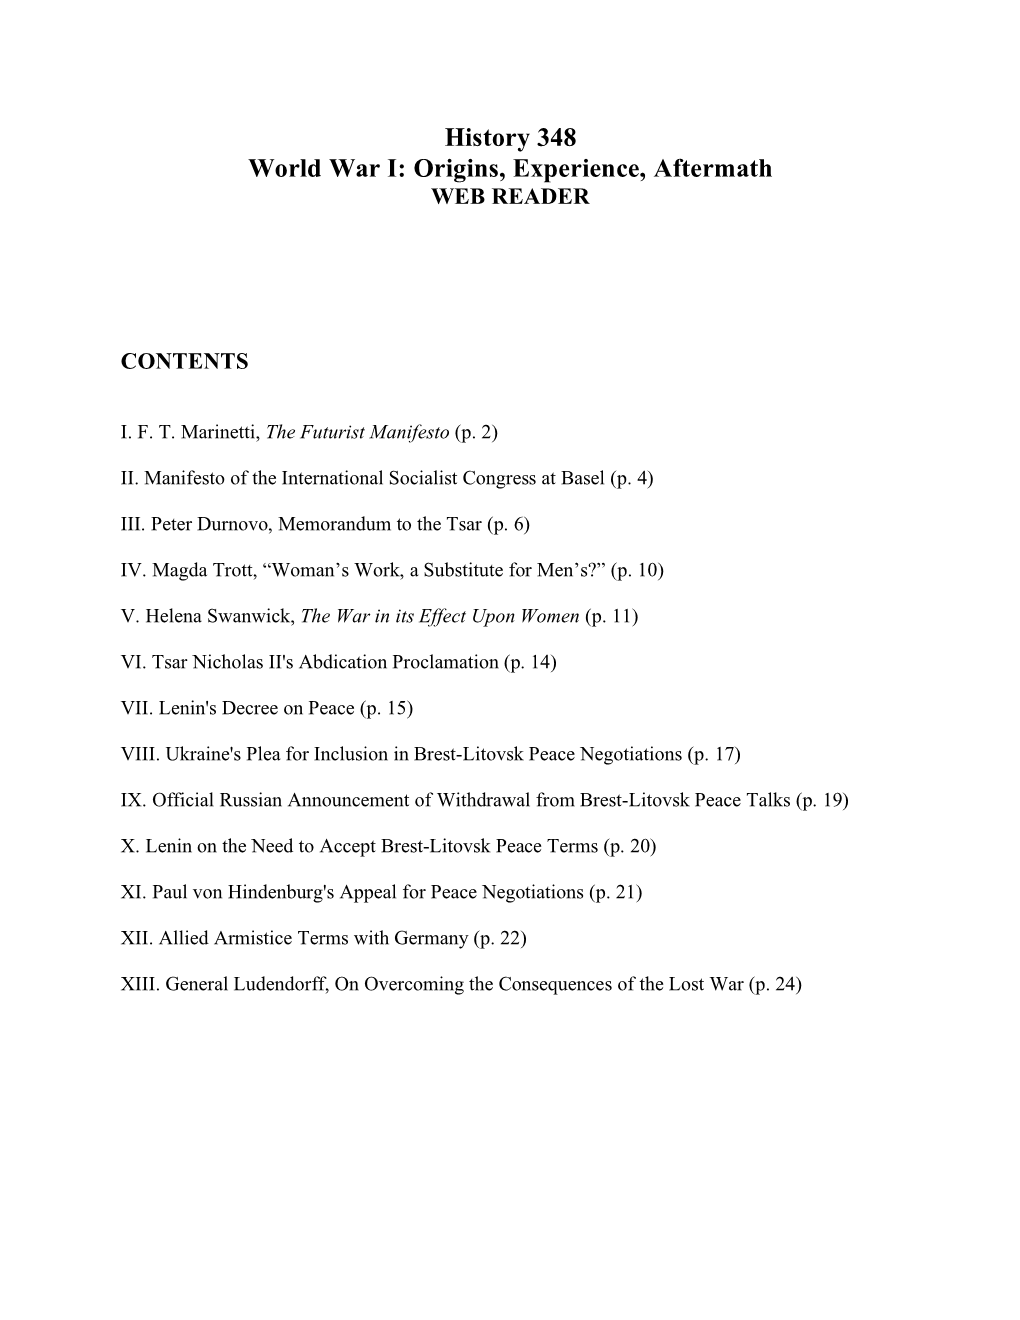 History 348 World War I: Origins, Experience, Aftermath WEB READER